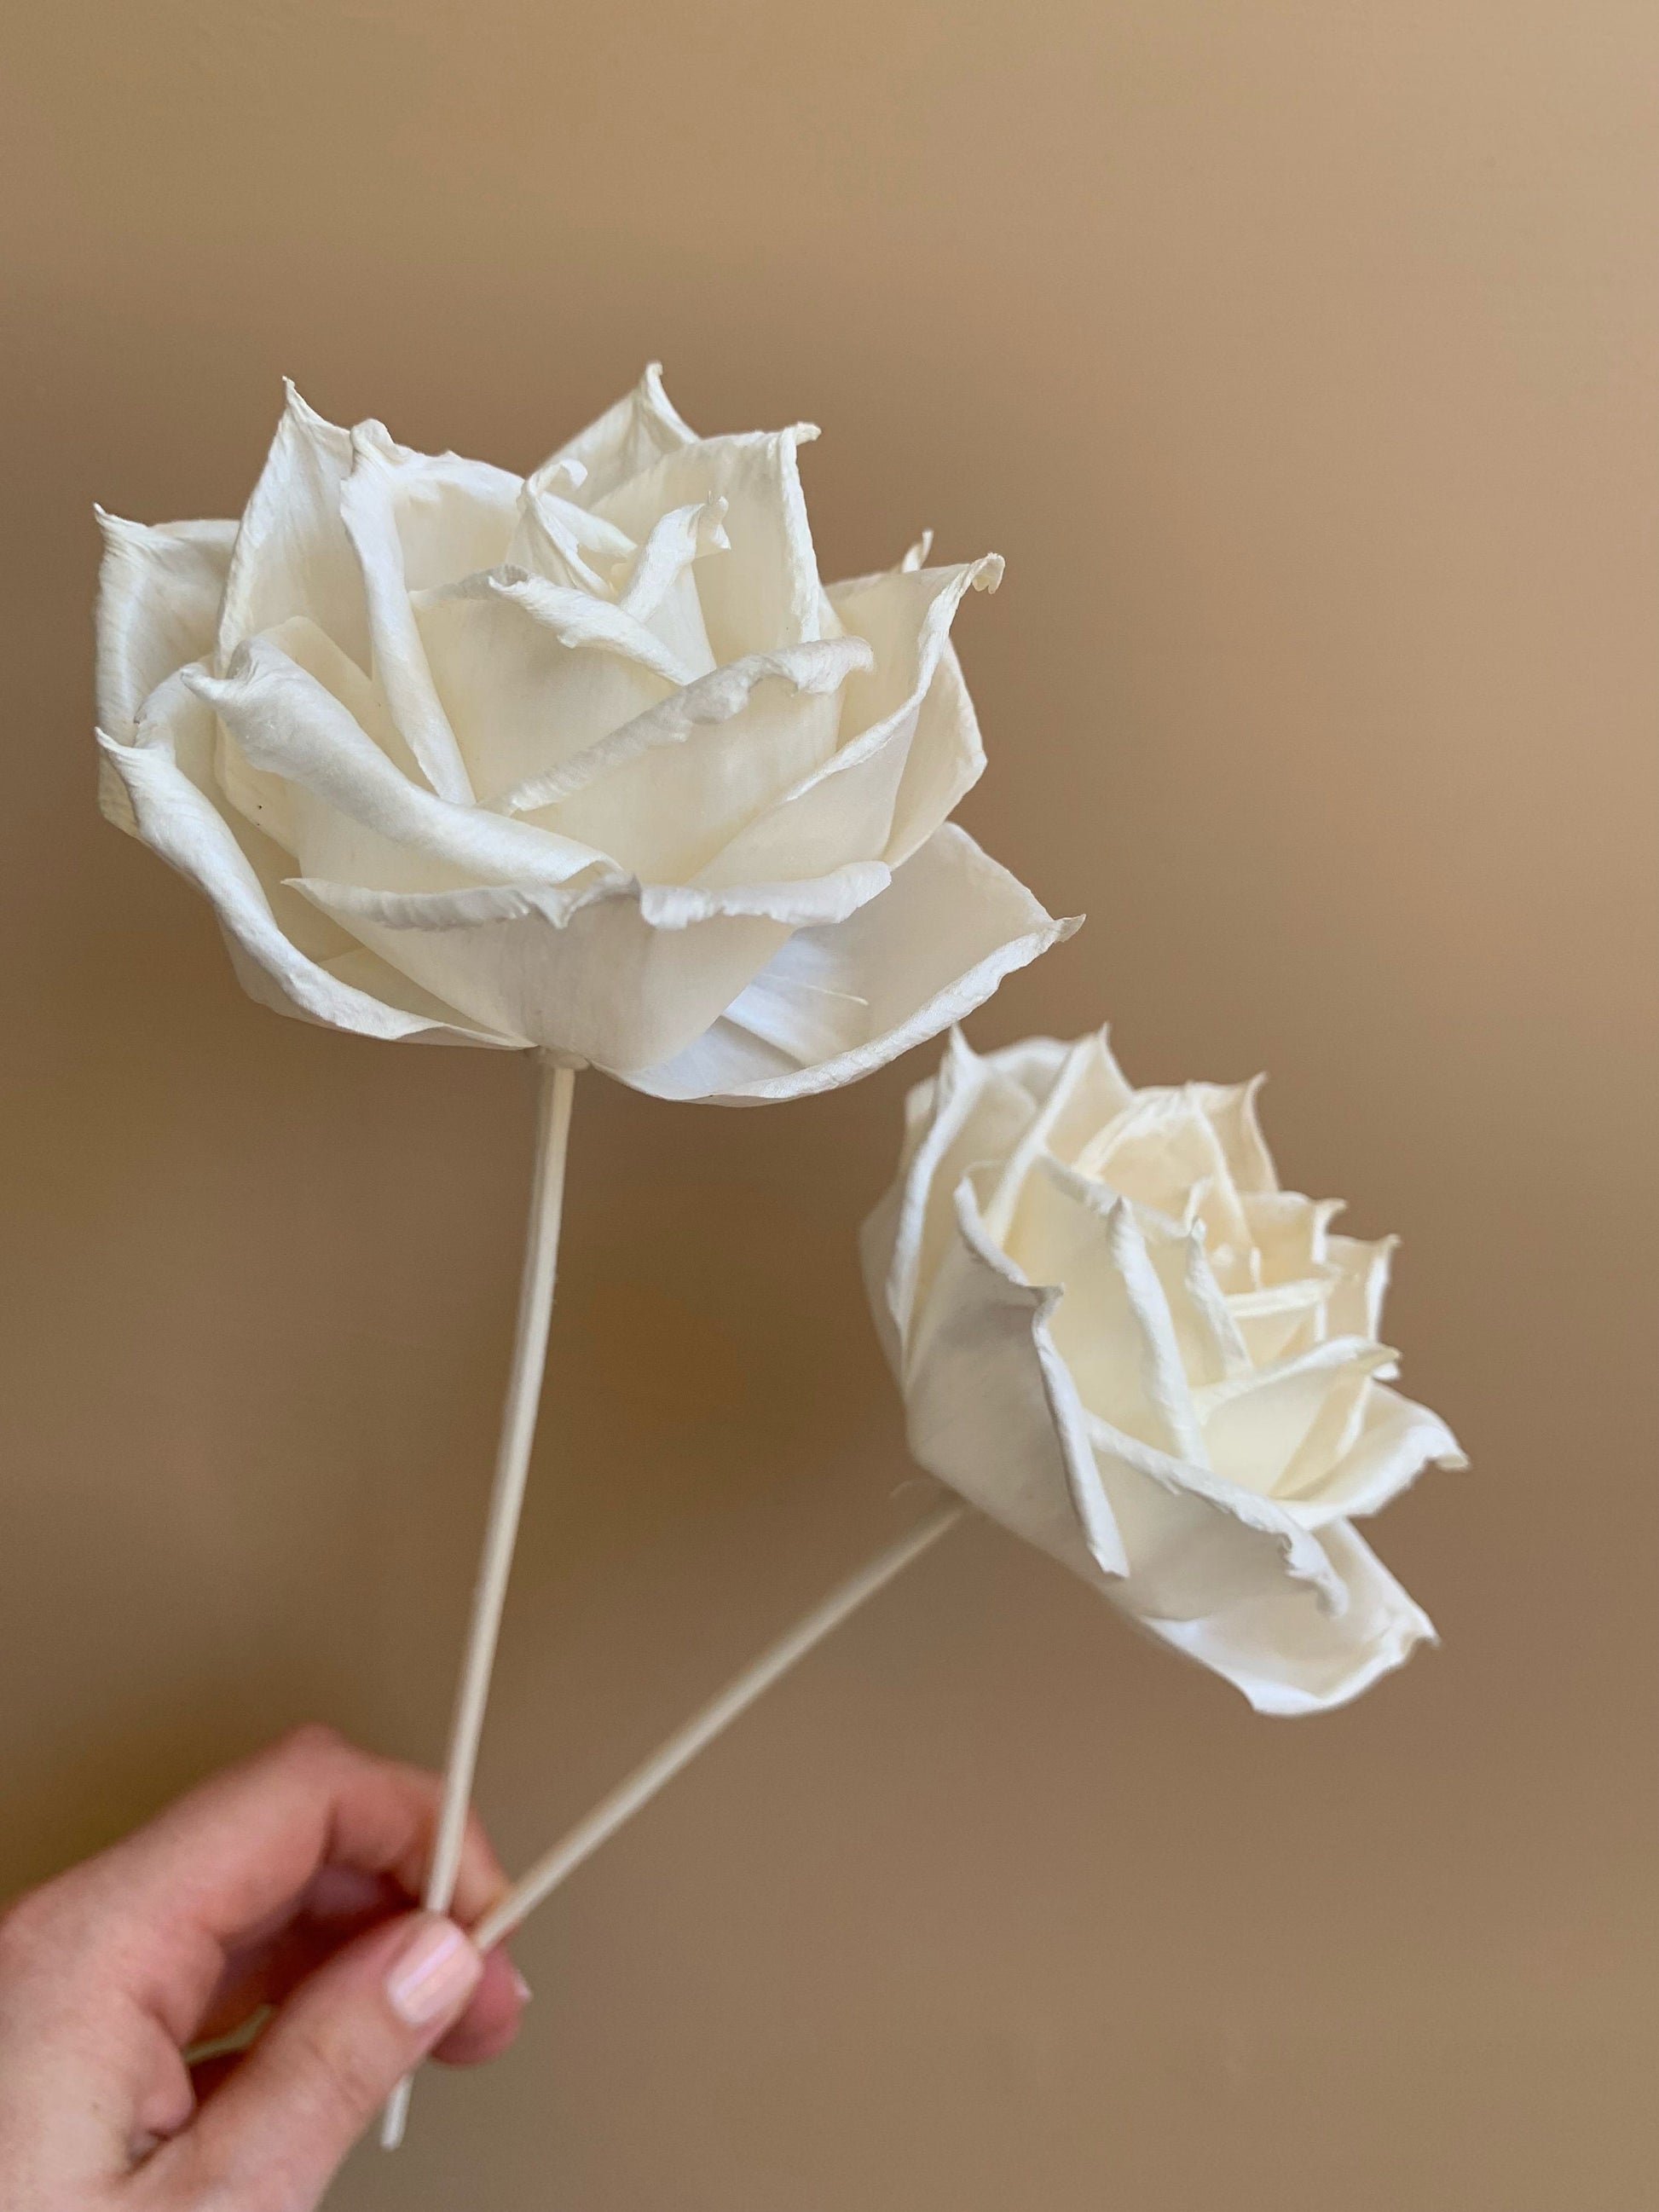 our original white rose pointed petals